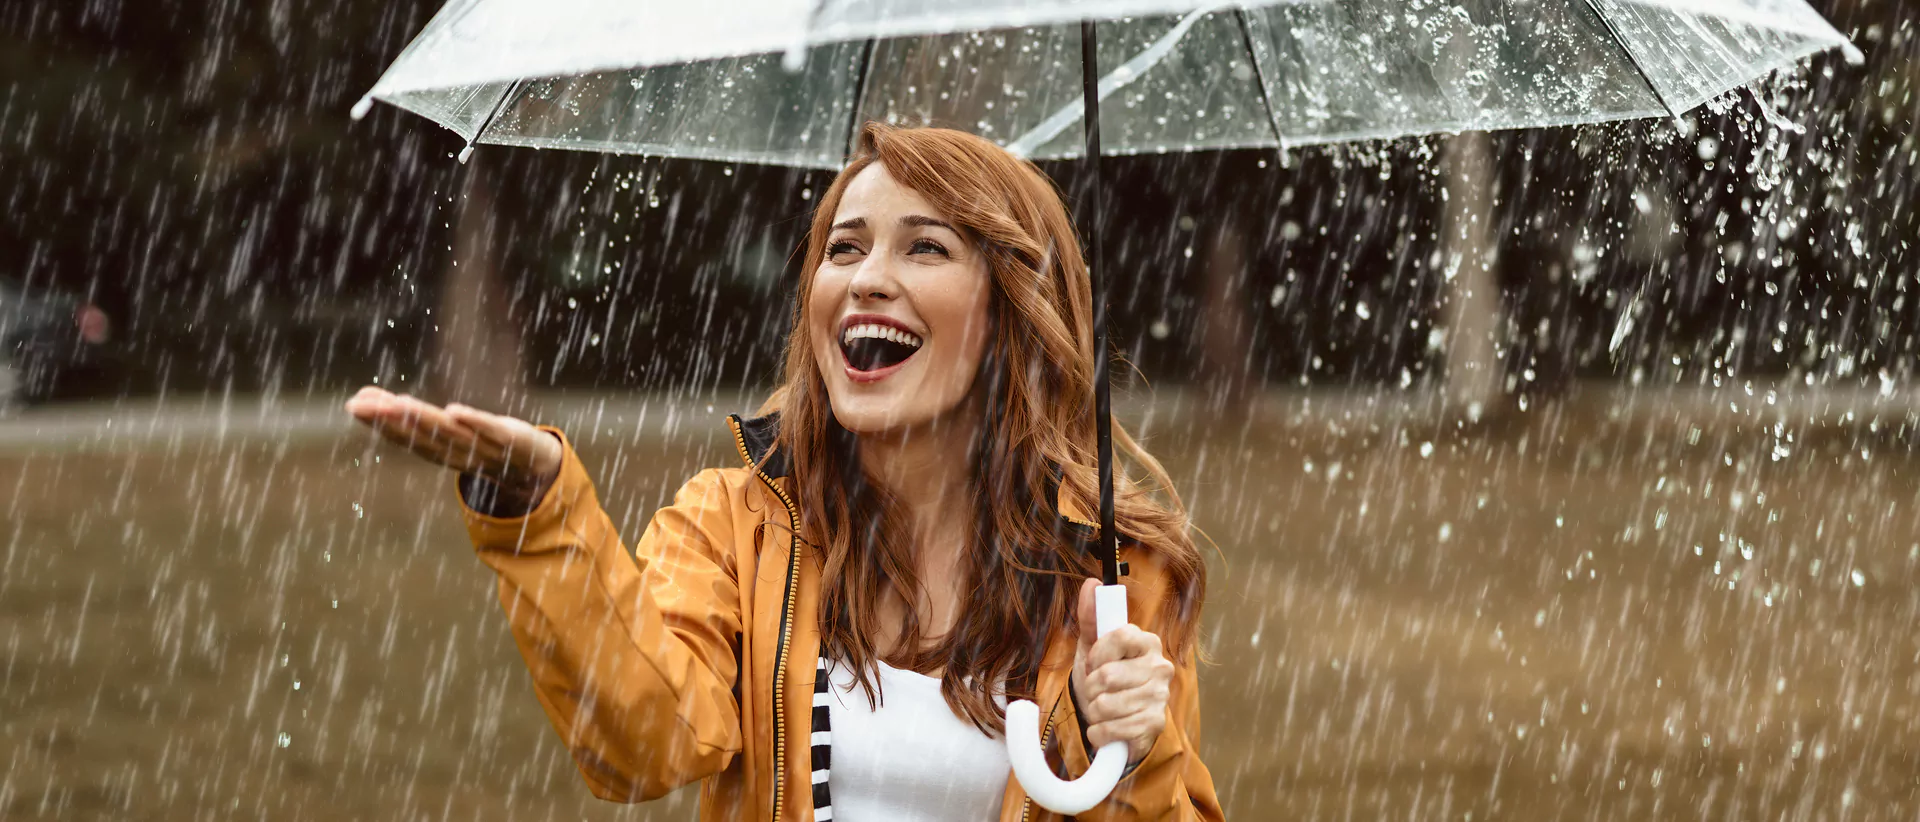 Rainy season skin care - girl holding an umbrella in the rain.